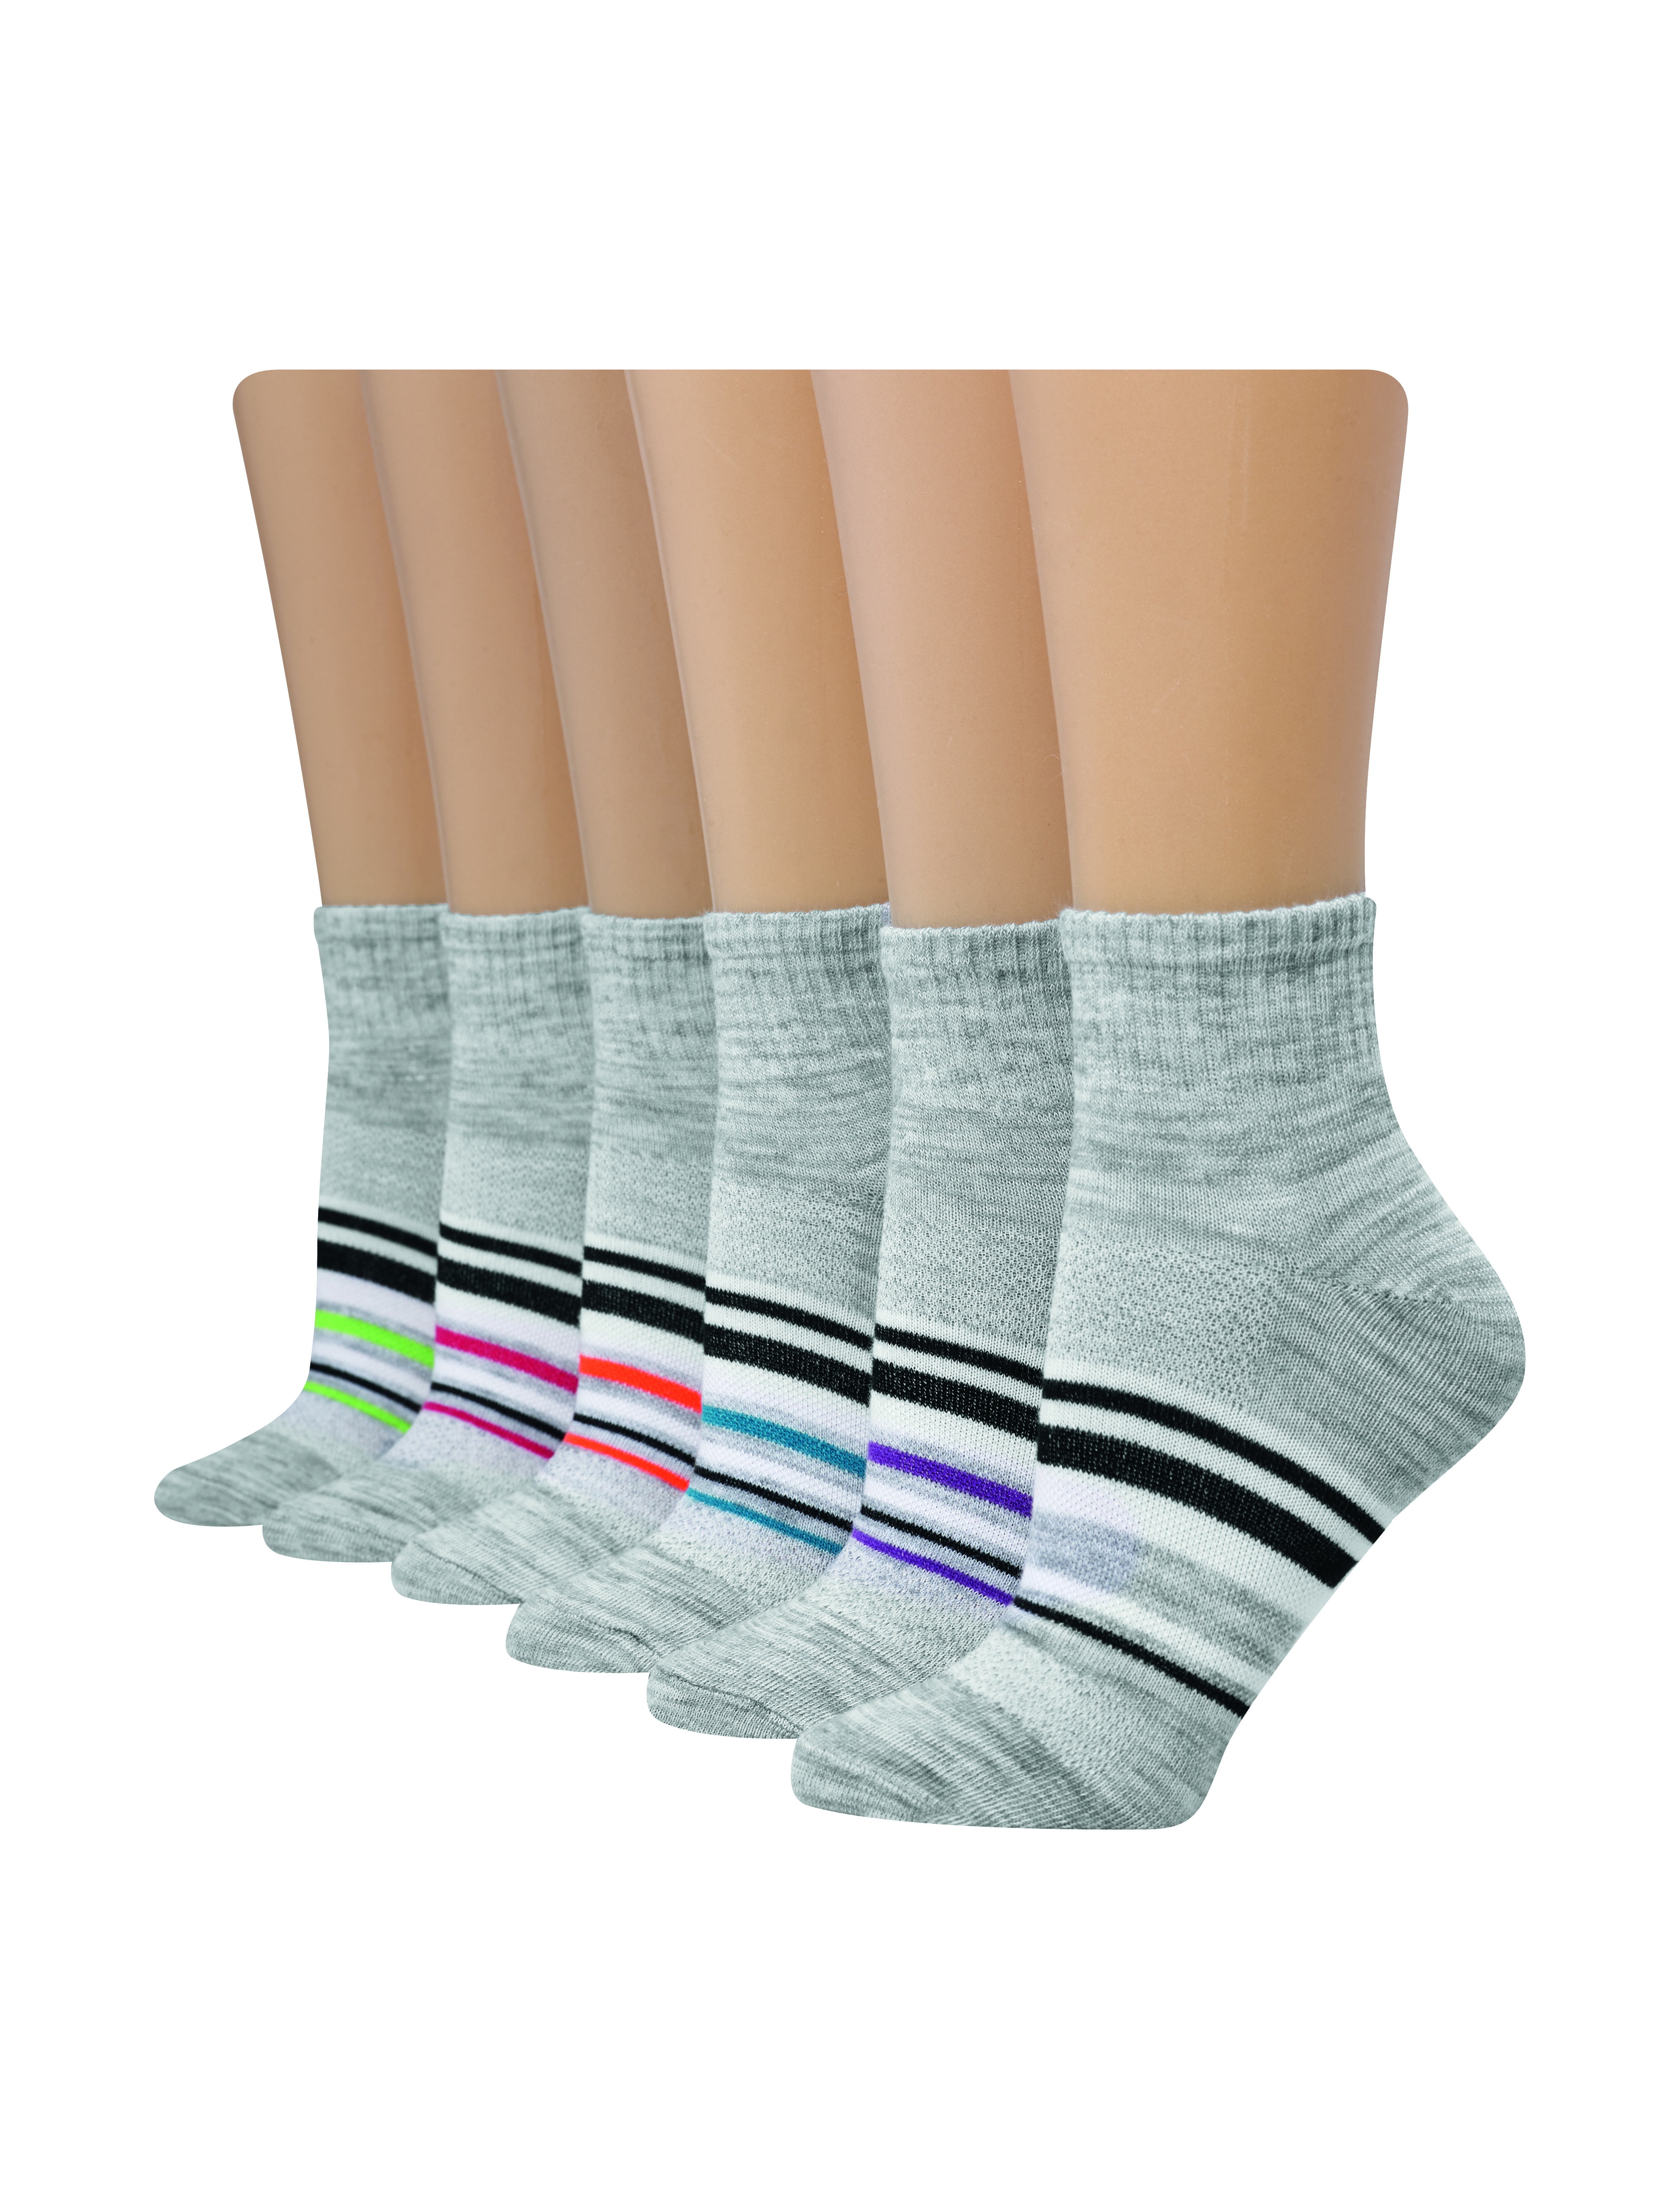 Hanes Hanes Womens Comfort Cool Lightweight Ankle Socks 6 Pack